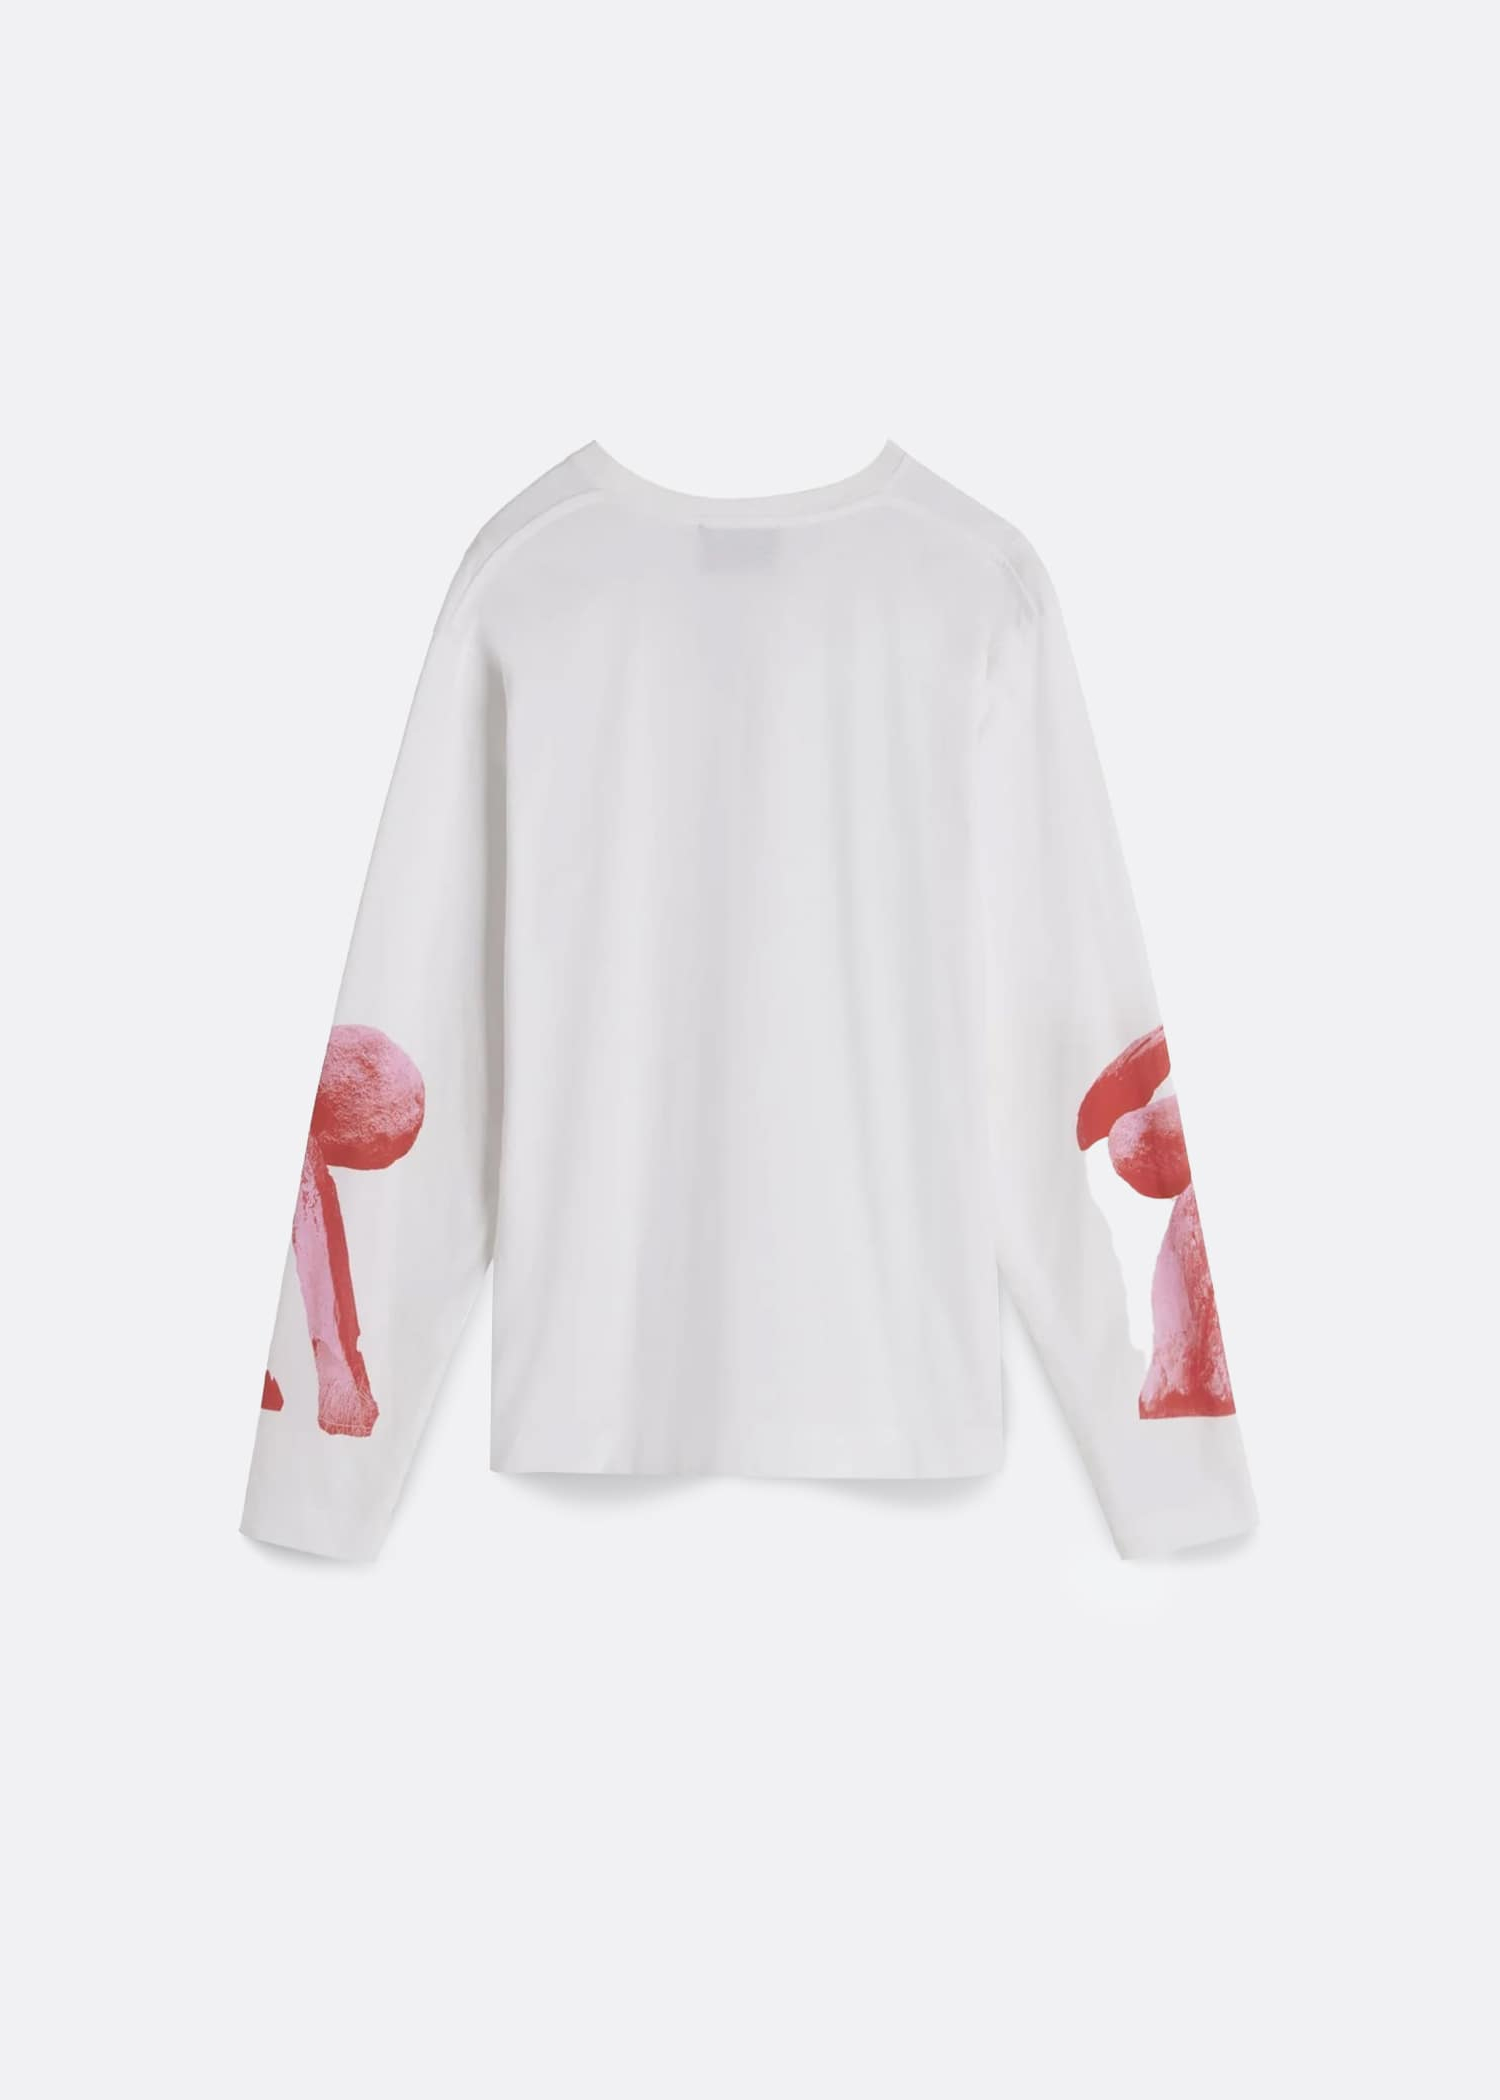 Simone Rocha Graphic Project Long Sleeve T-Shirt